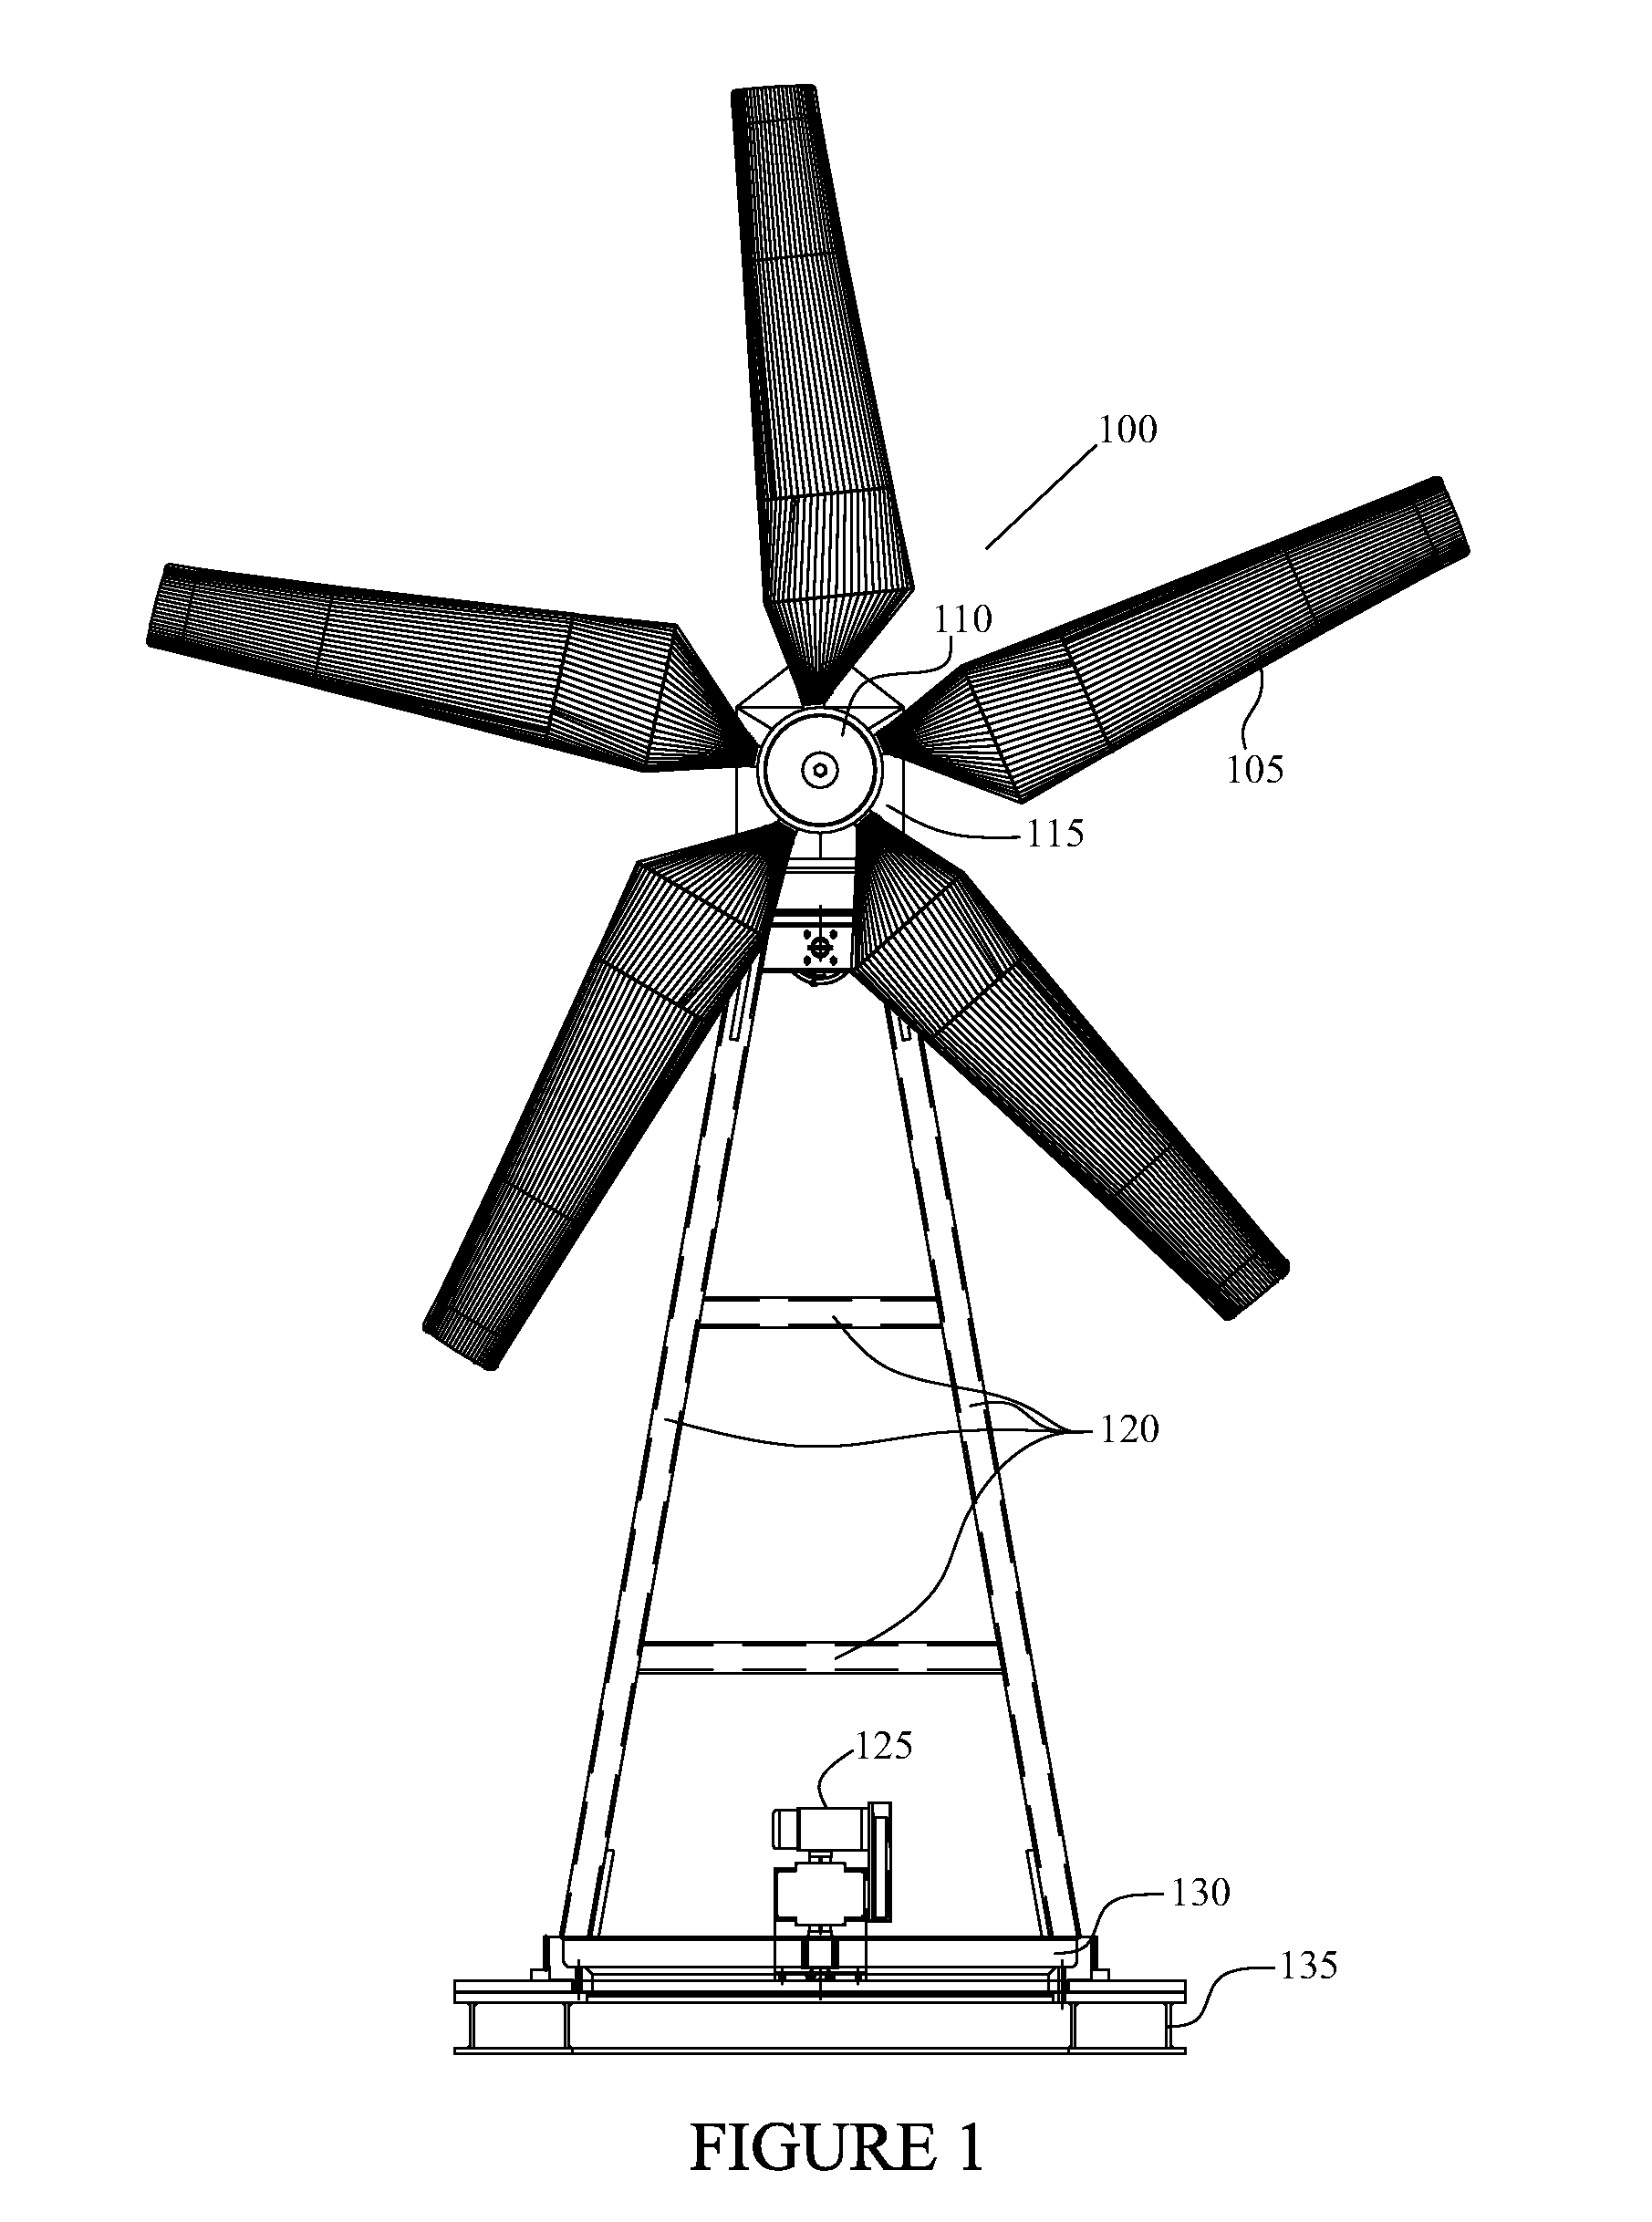 Shrouded wind turbine system with yaw control